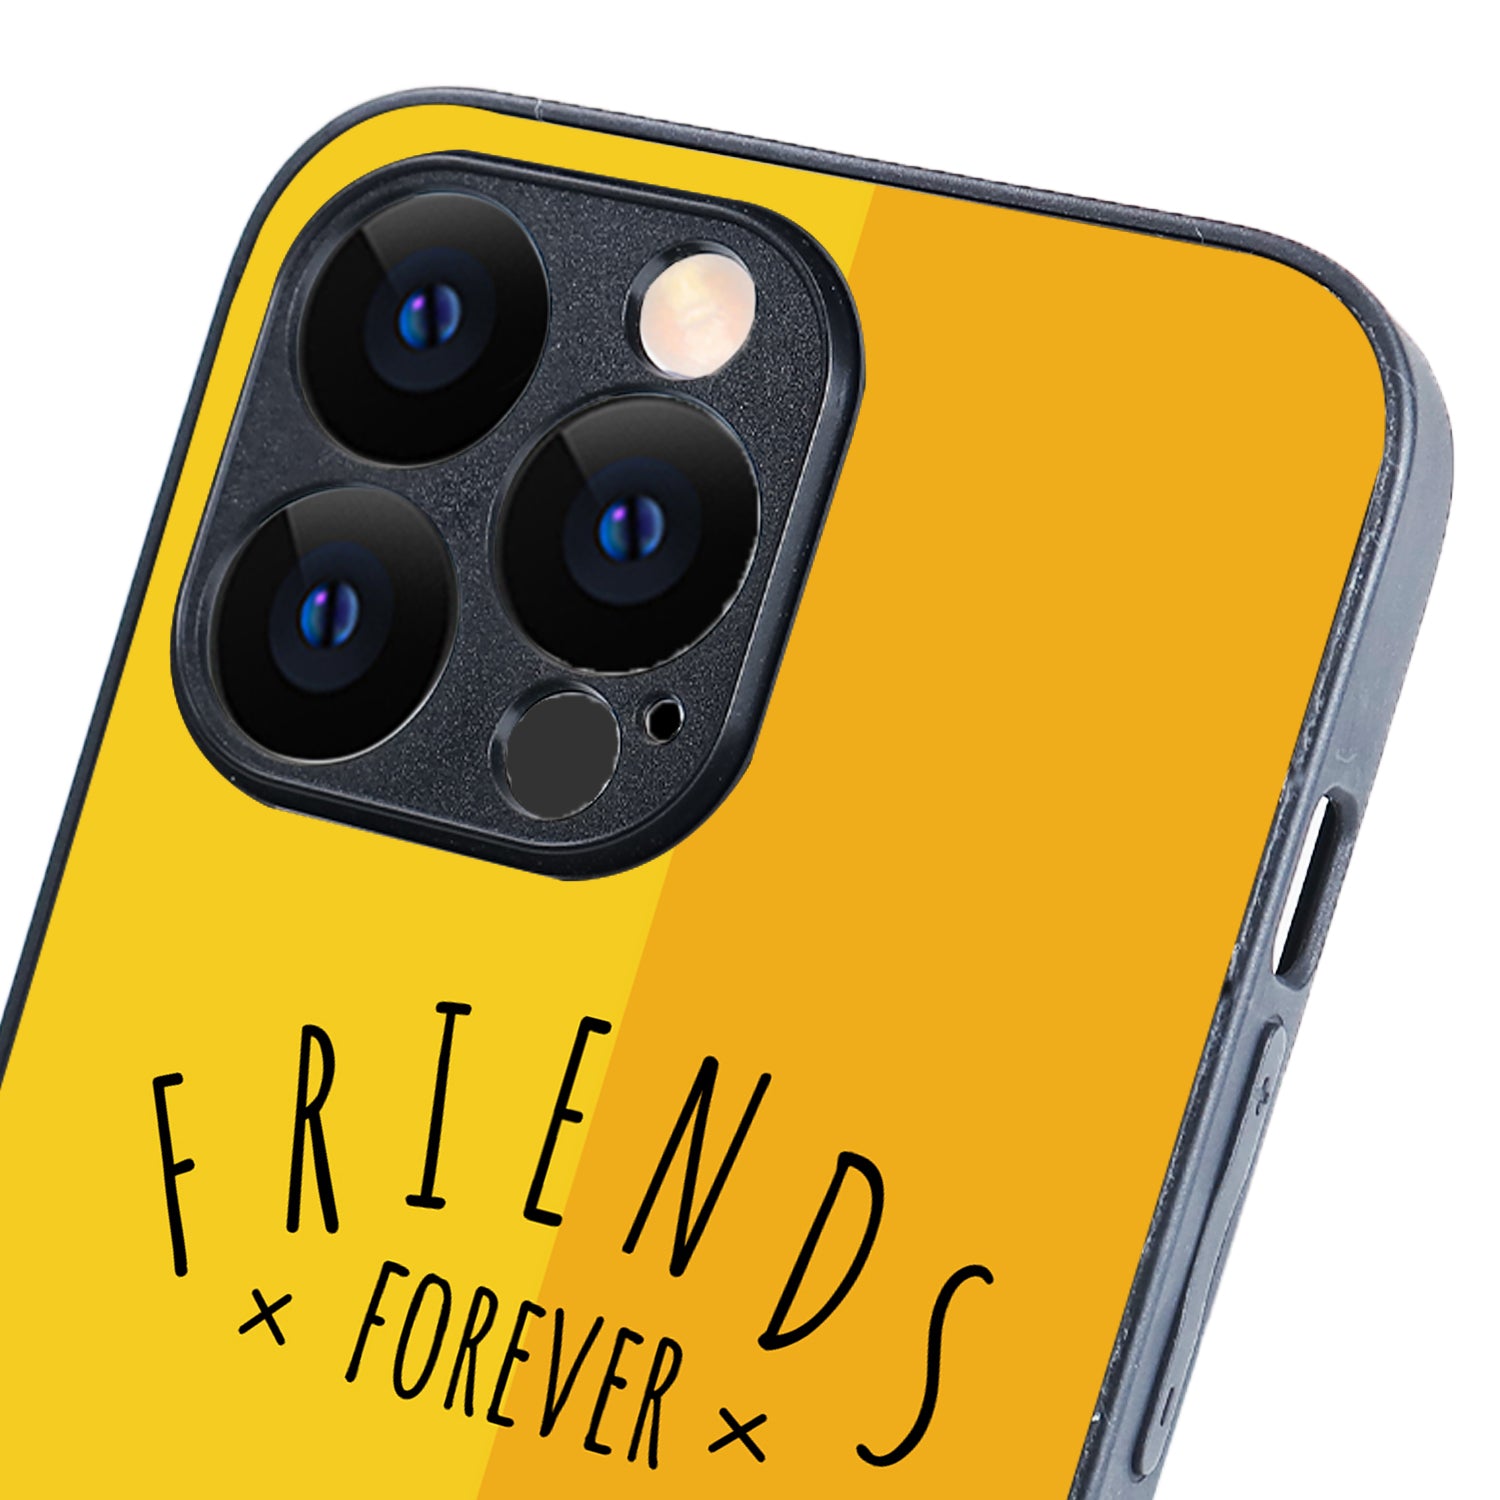 Yellow Bff iPhone 13 Pro Case